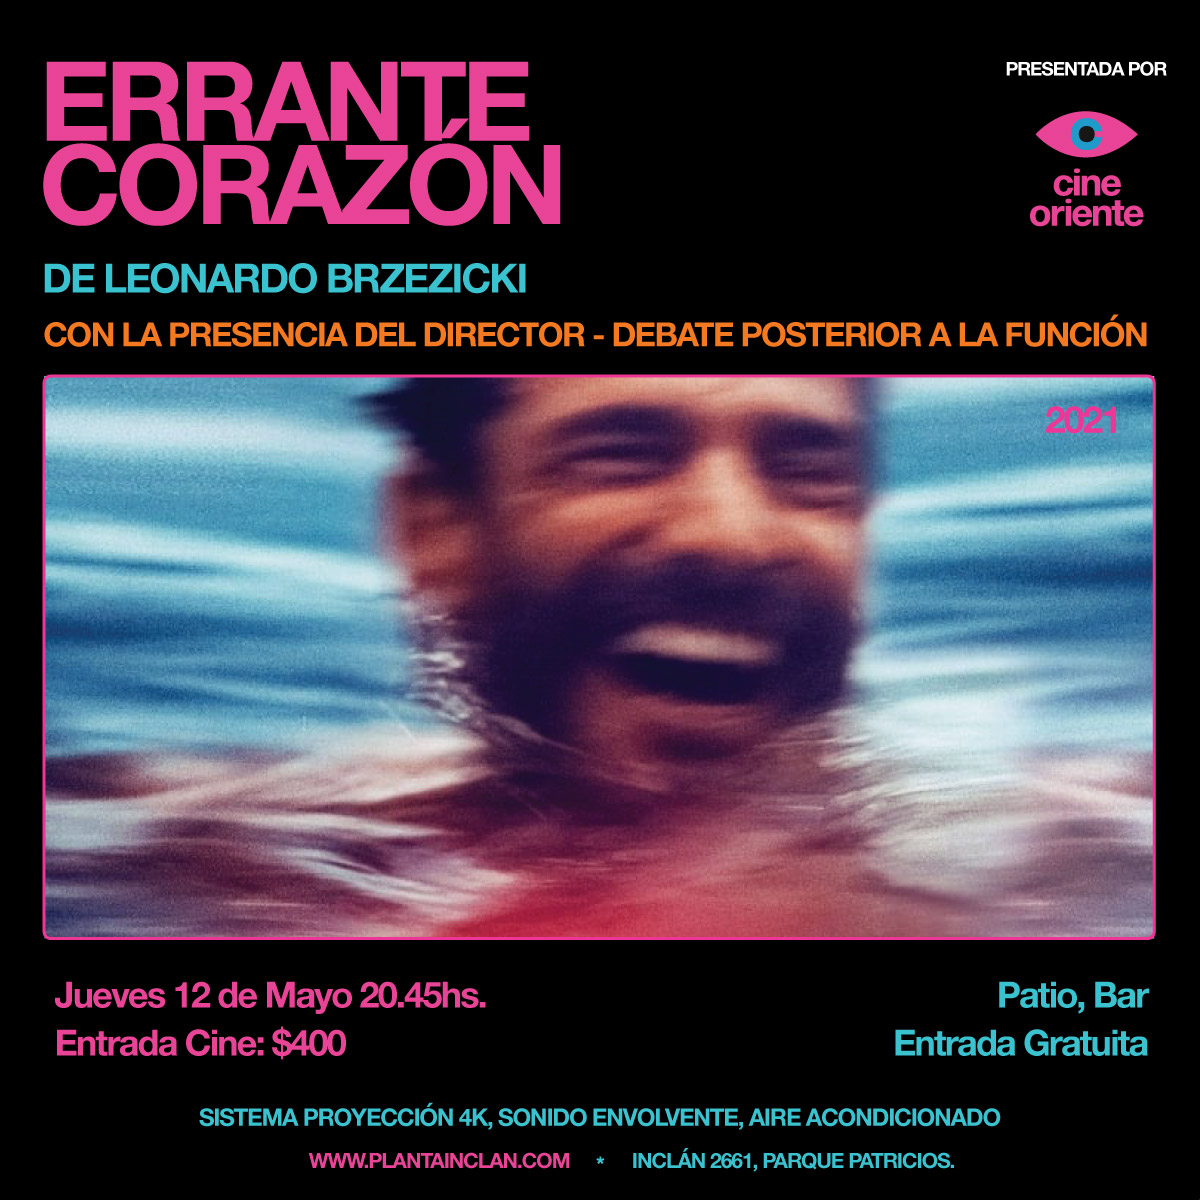 Errante-Corazon-Mayo-22-Frame-01